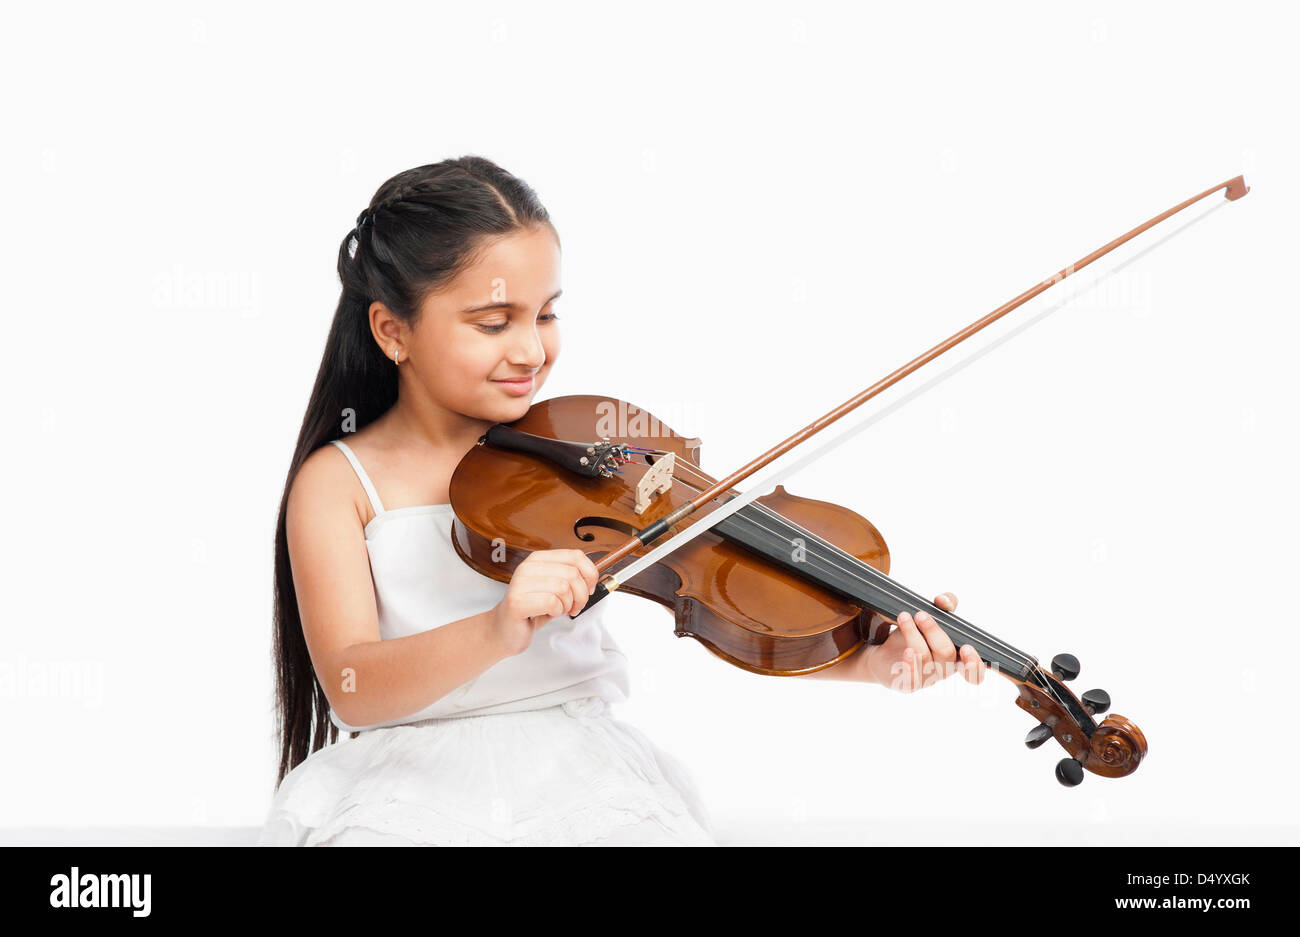 Girl playing a violin Stock Photo